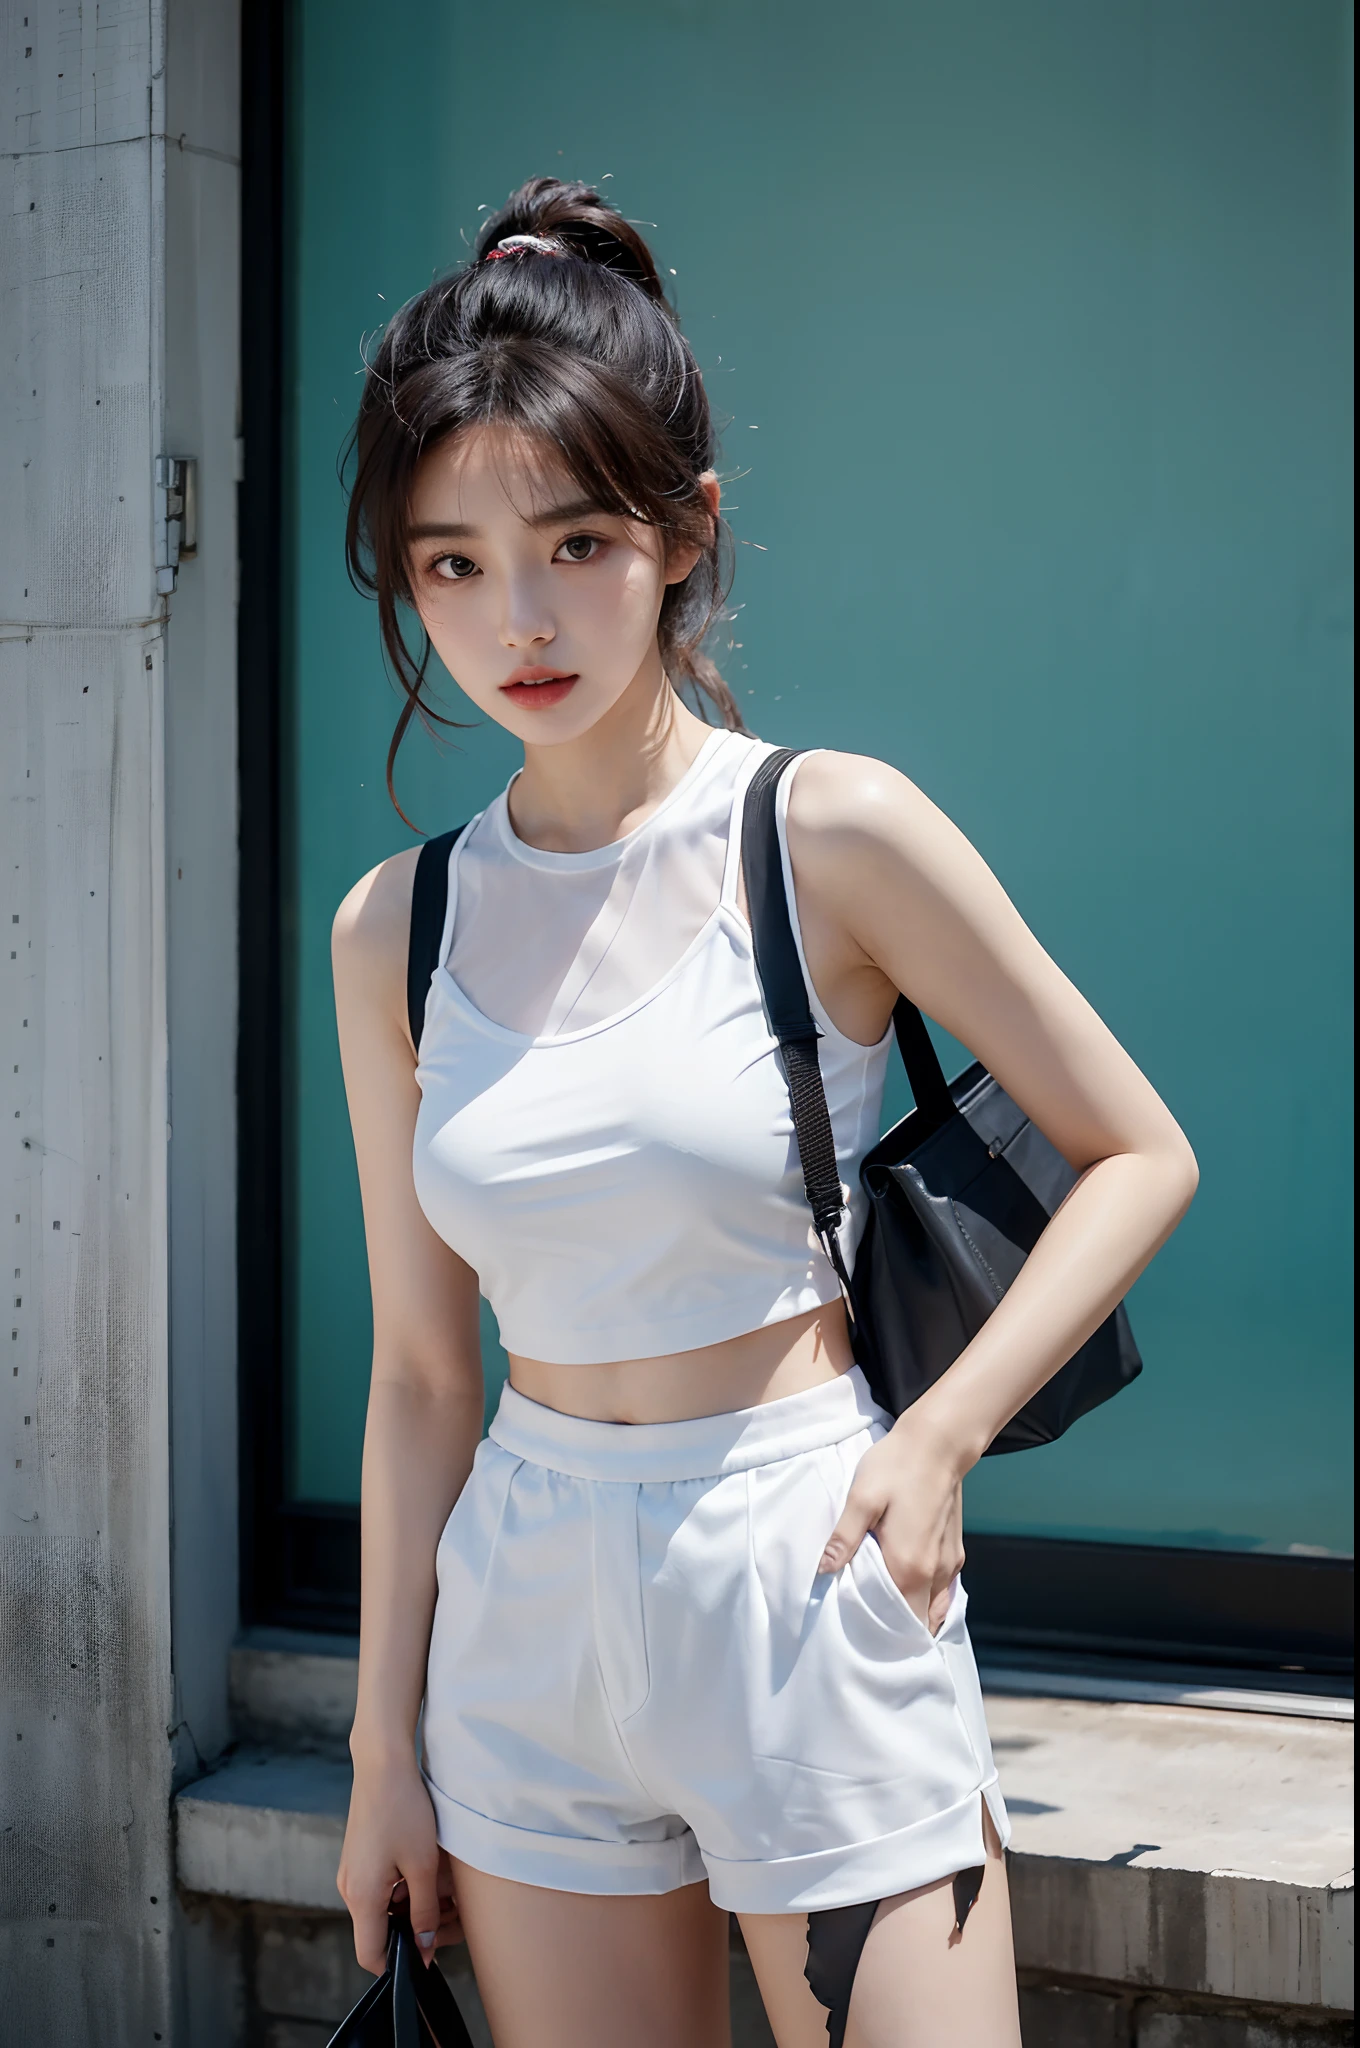 araffe asian woman in a green top and black shorts, korean girl, gorgeous  young korean woman, 2 4 year old female model, asian girl - SeaArt AI